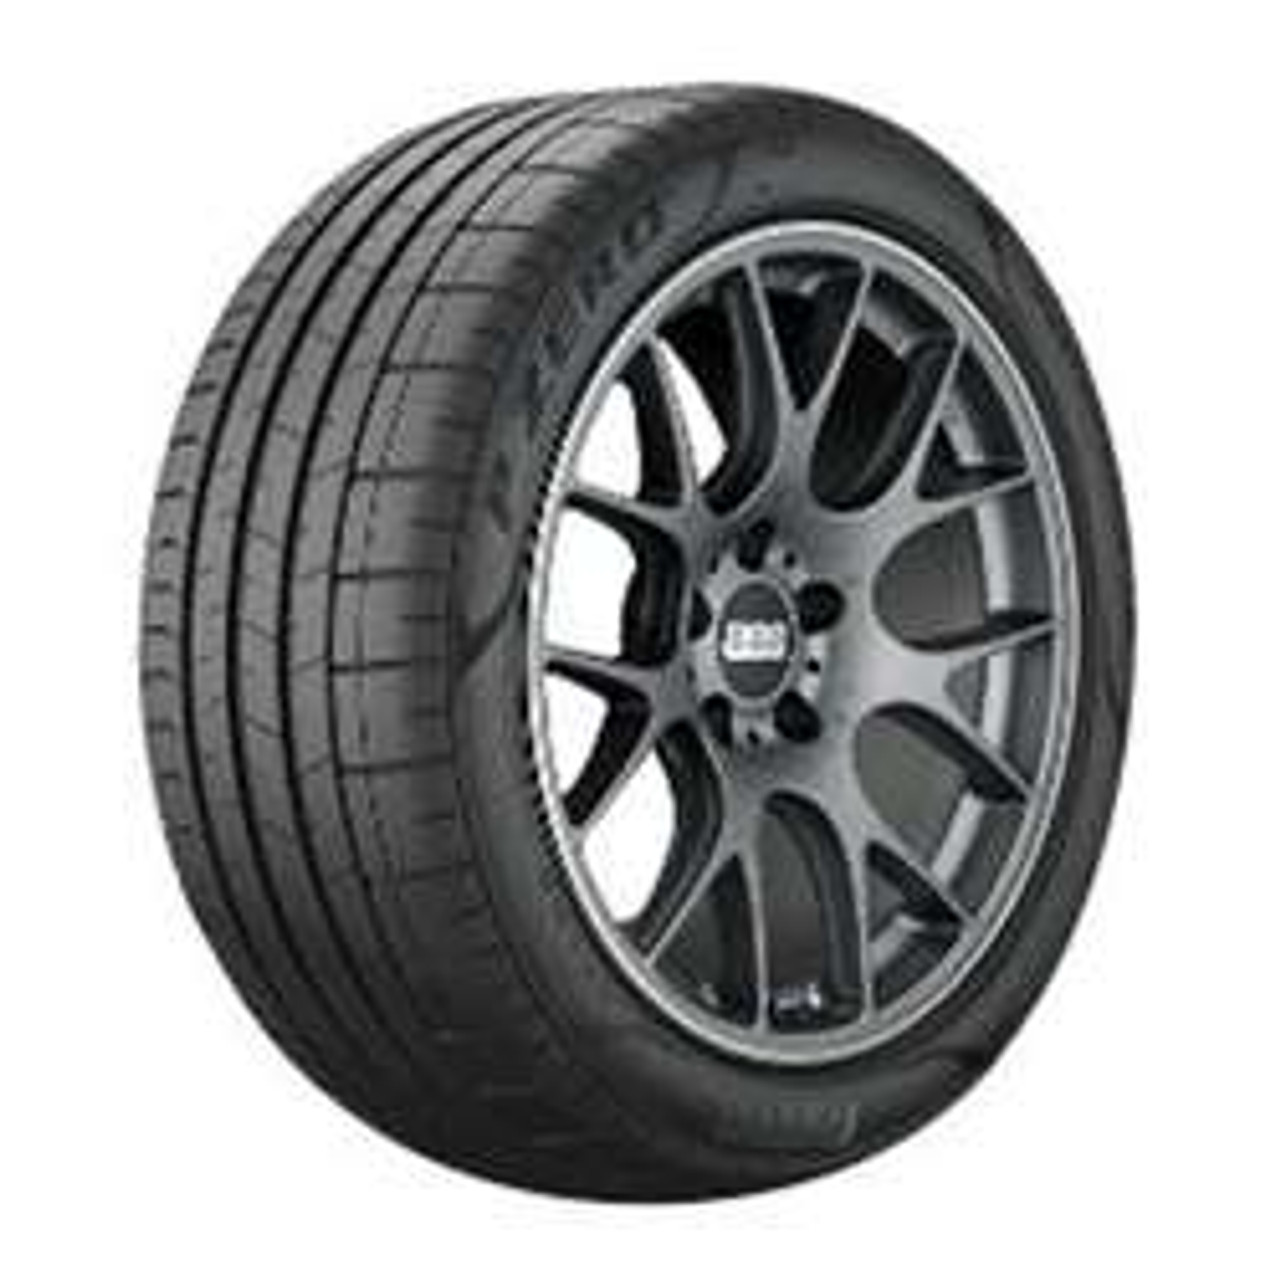 Pirelli P Zero PZ4 Sport Tire 275/50R20 113W 280AAA BW - IN CART DISCOUNT!